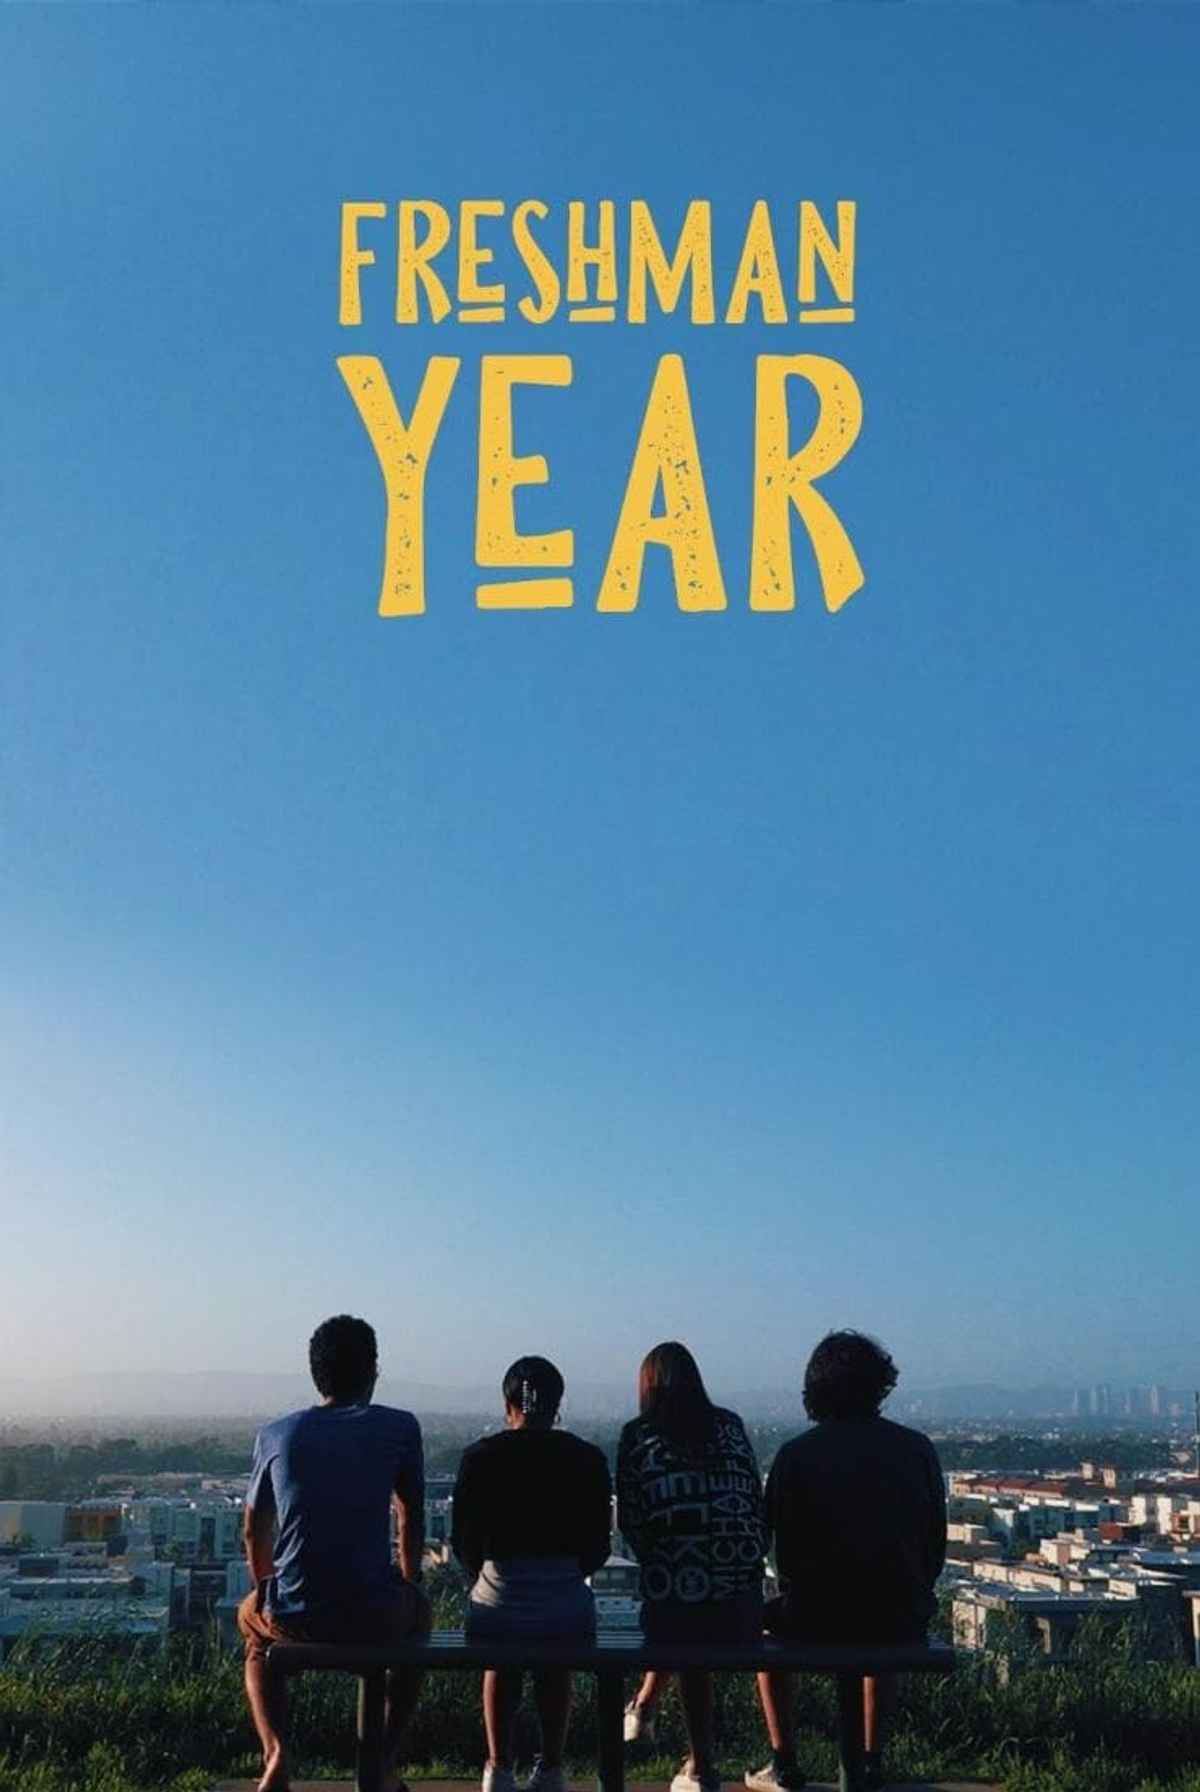 movie review of freshman year